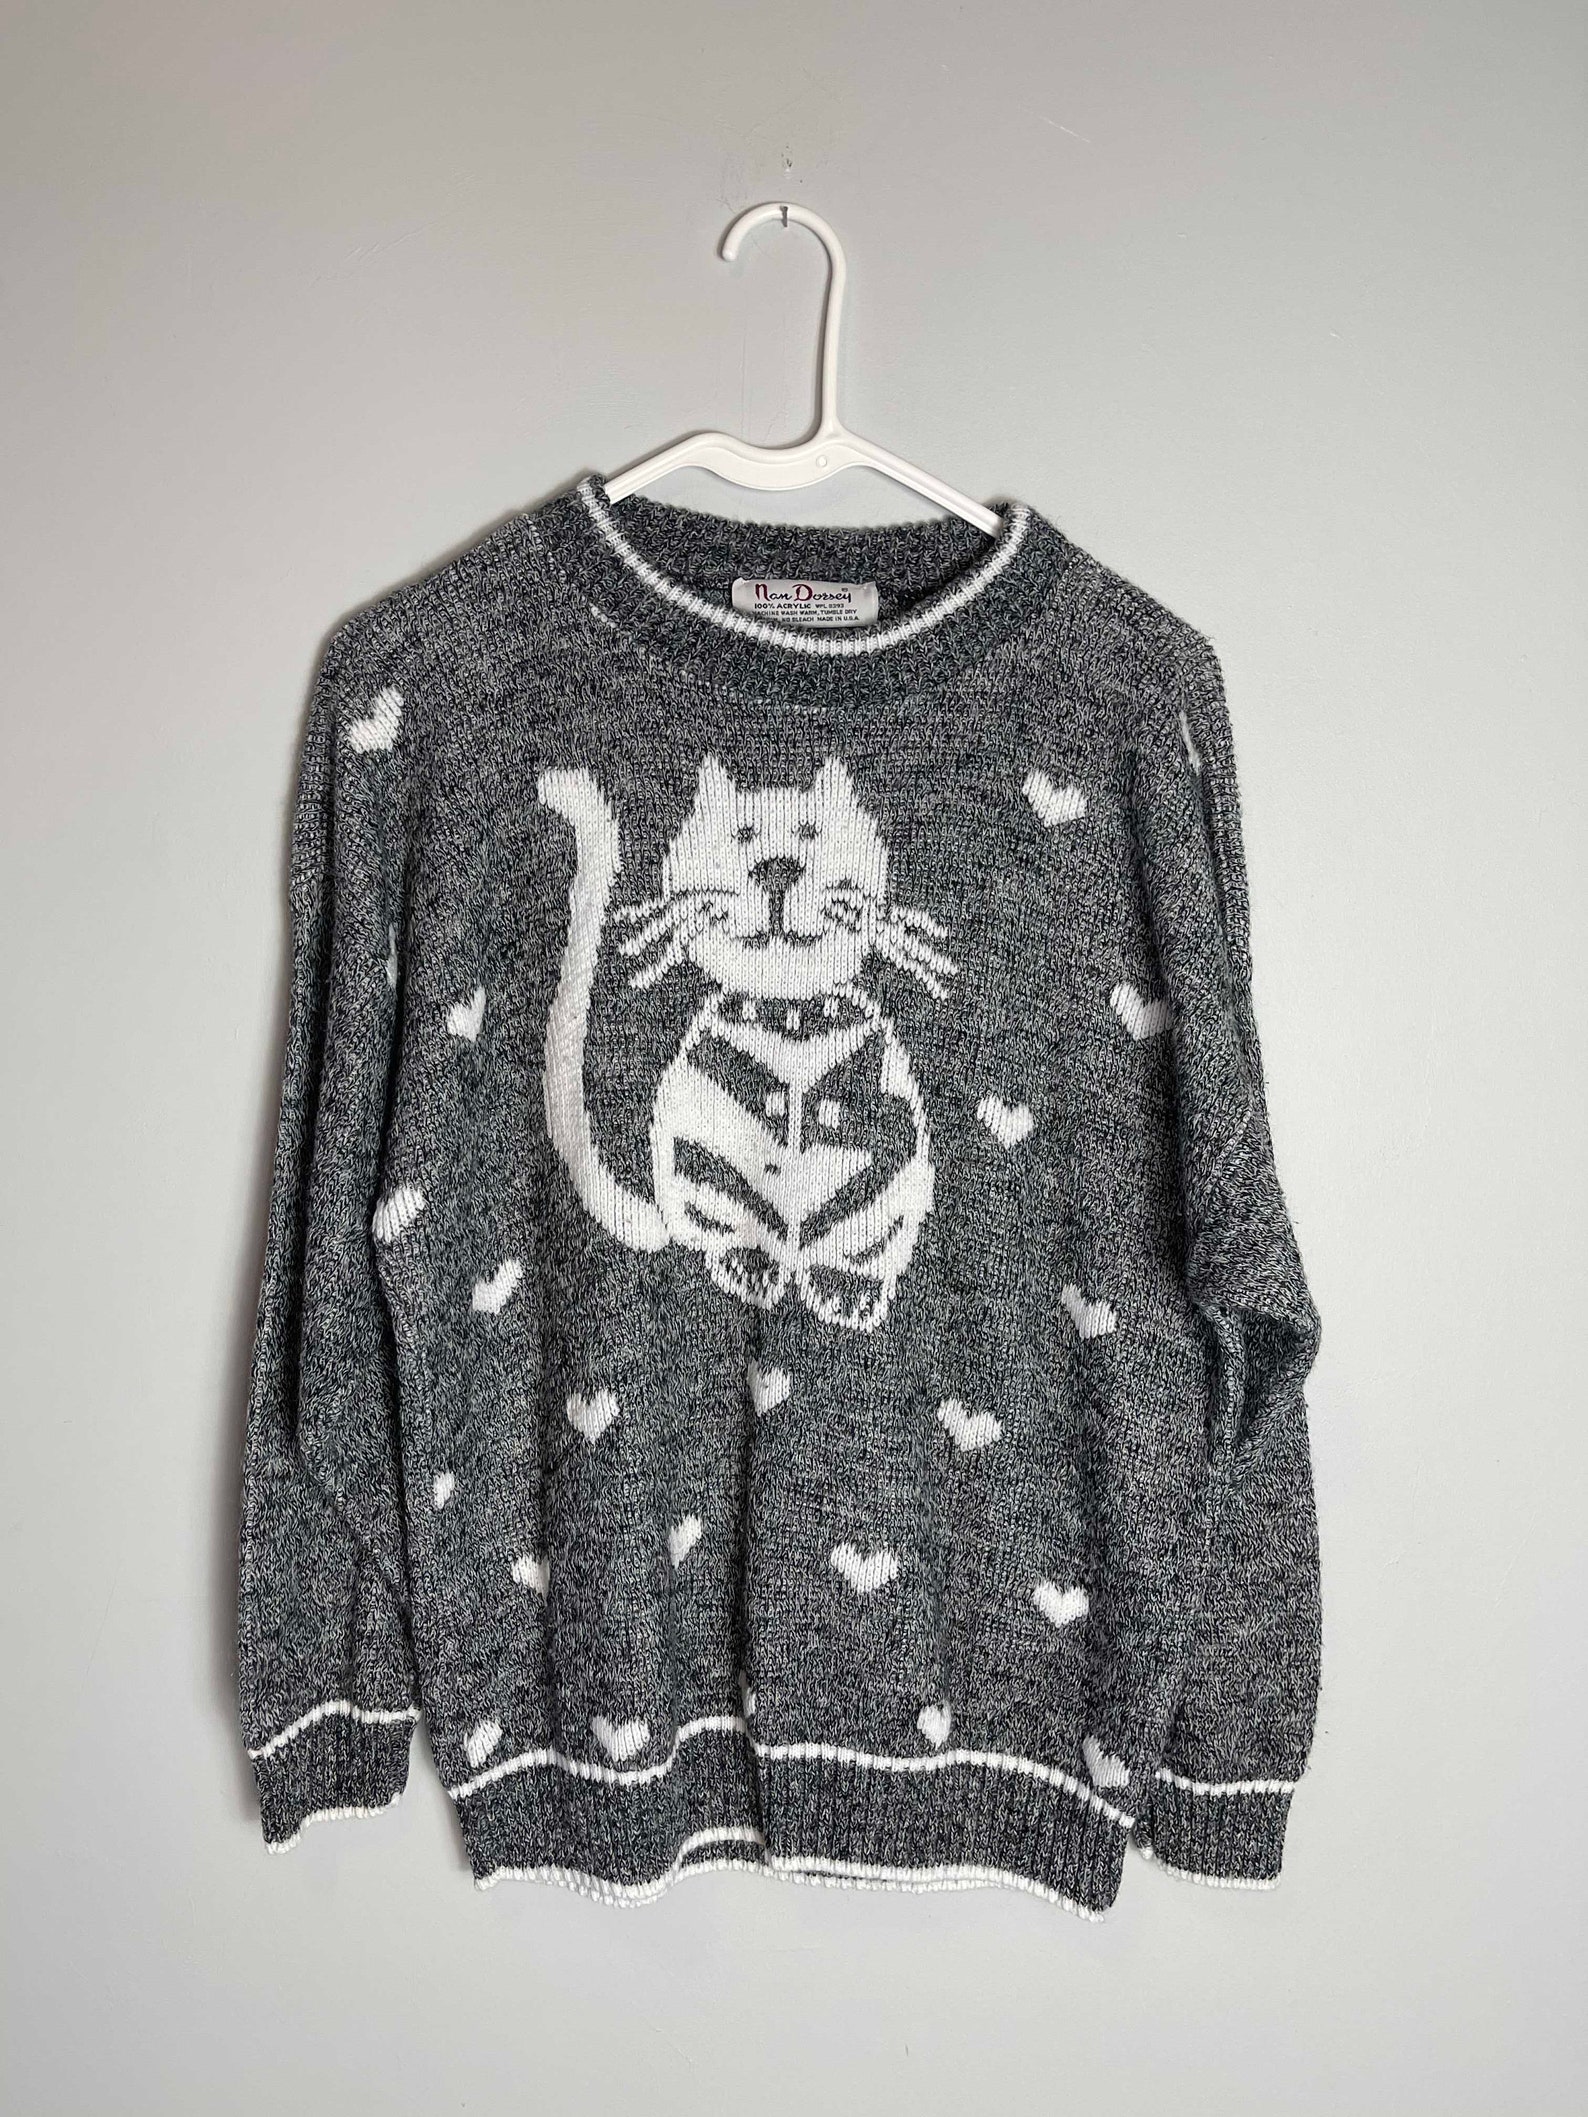 Vintage Super Cute Cat Sweater / Nan Dorsey / Size Medium | Etsy